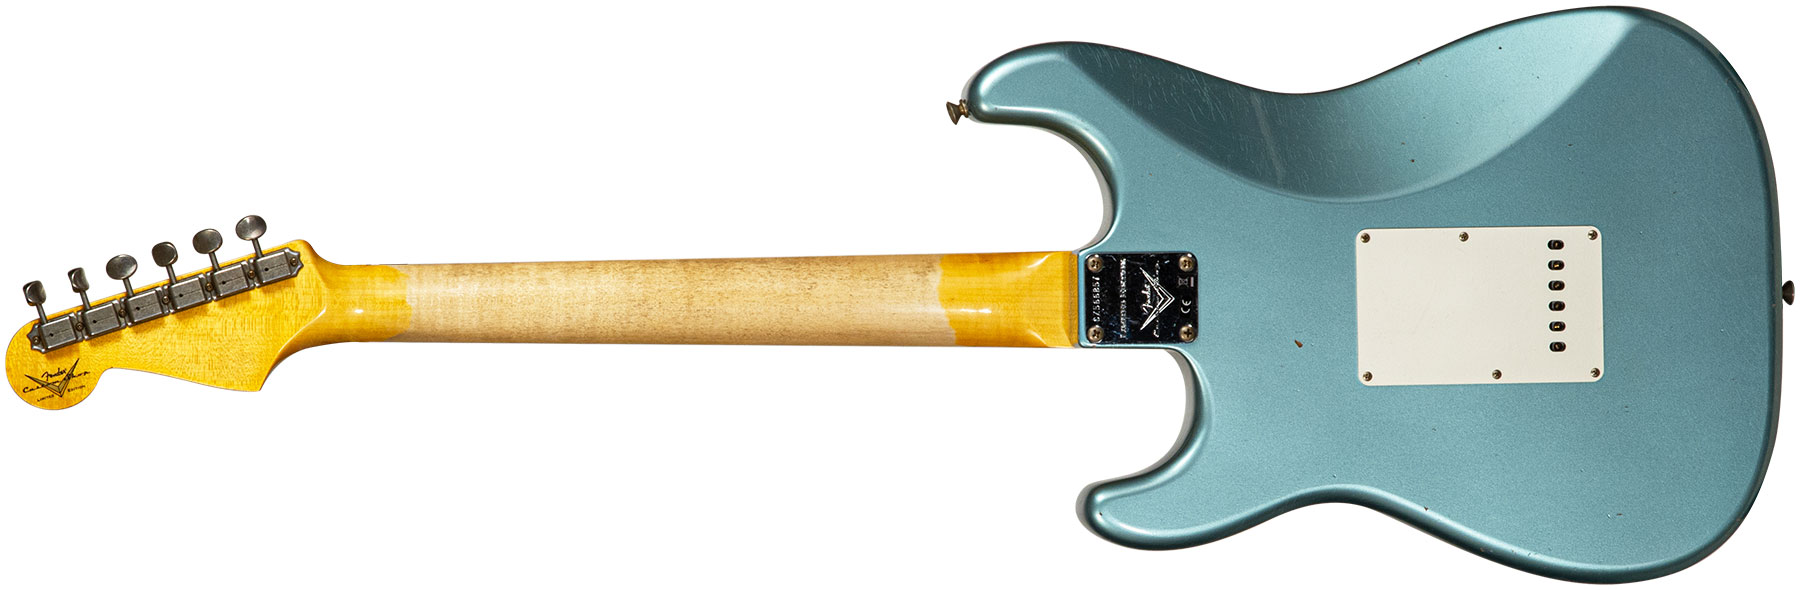 Fender Custom Shop Strat 1959 3s Trem Rw #cz566857 - Journeyman Relic Teal Green Metallic - Str shape electric guitar - Variation 1